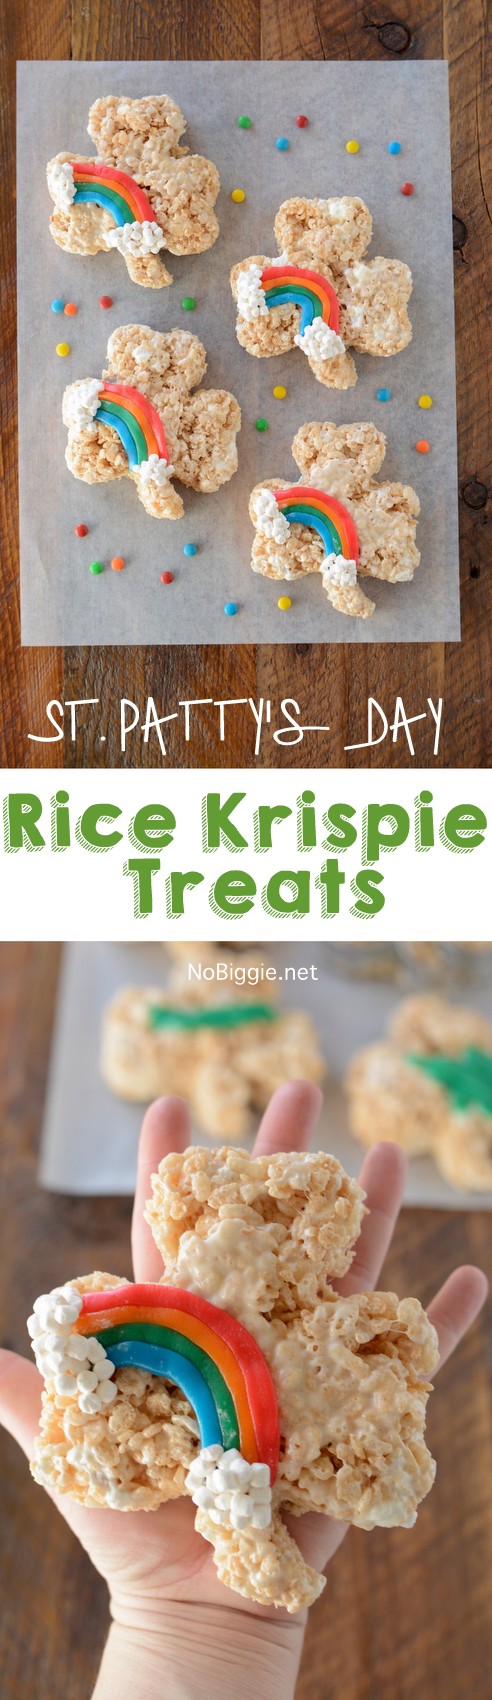 St. Patty's Day Rice Krispie Treats | NoBiggie.net